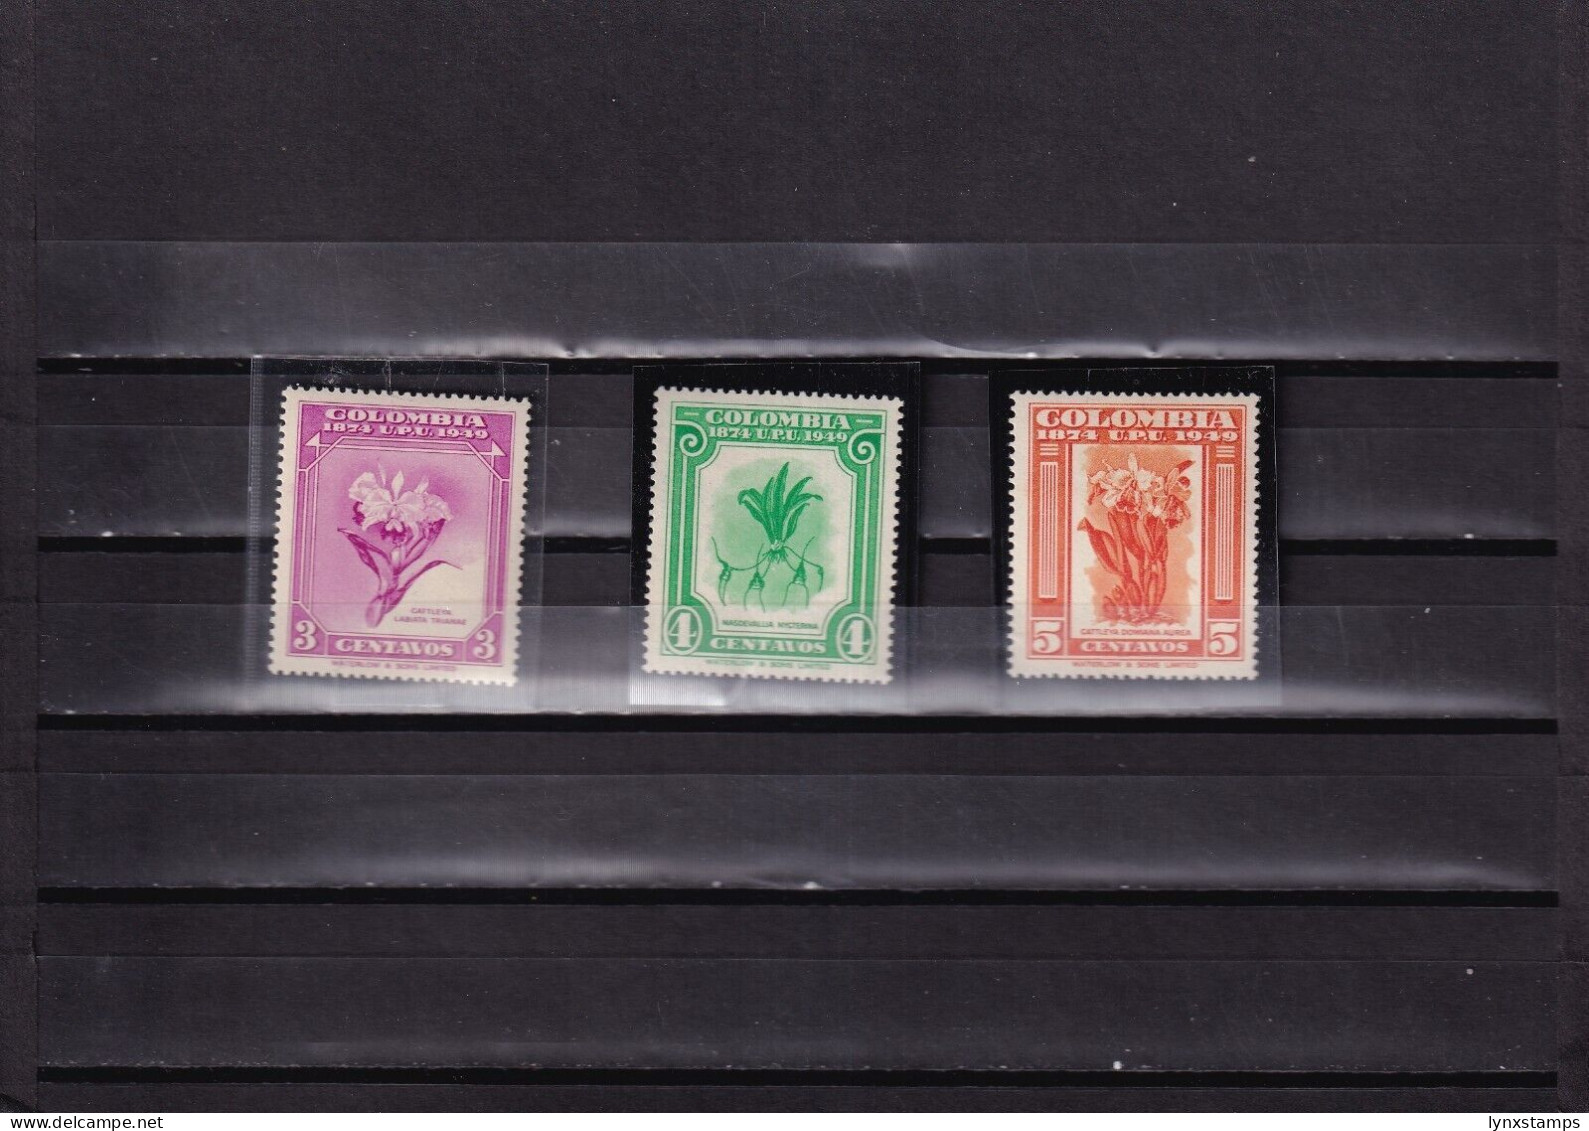 ER03 Colombia 1950 75th Anniversary Of Universal Postal Union (U.P.U.) MNH Stamp - Kolumbien